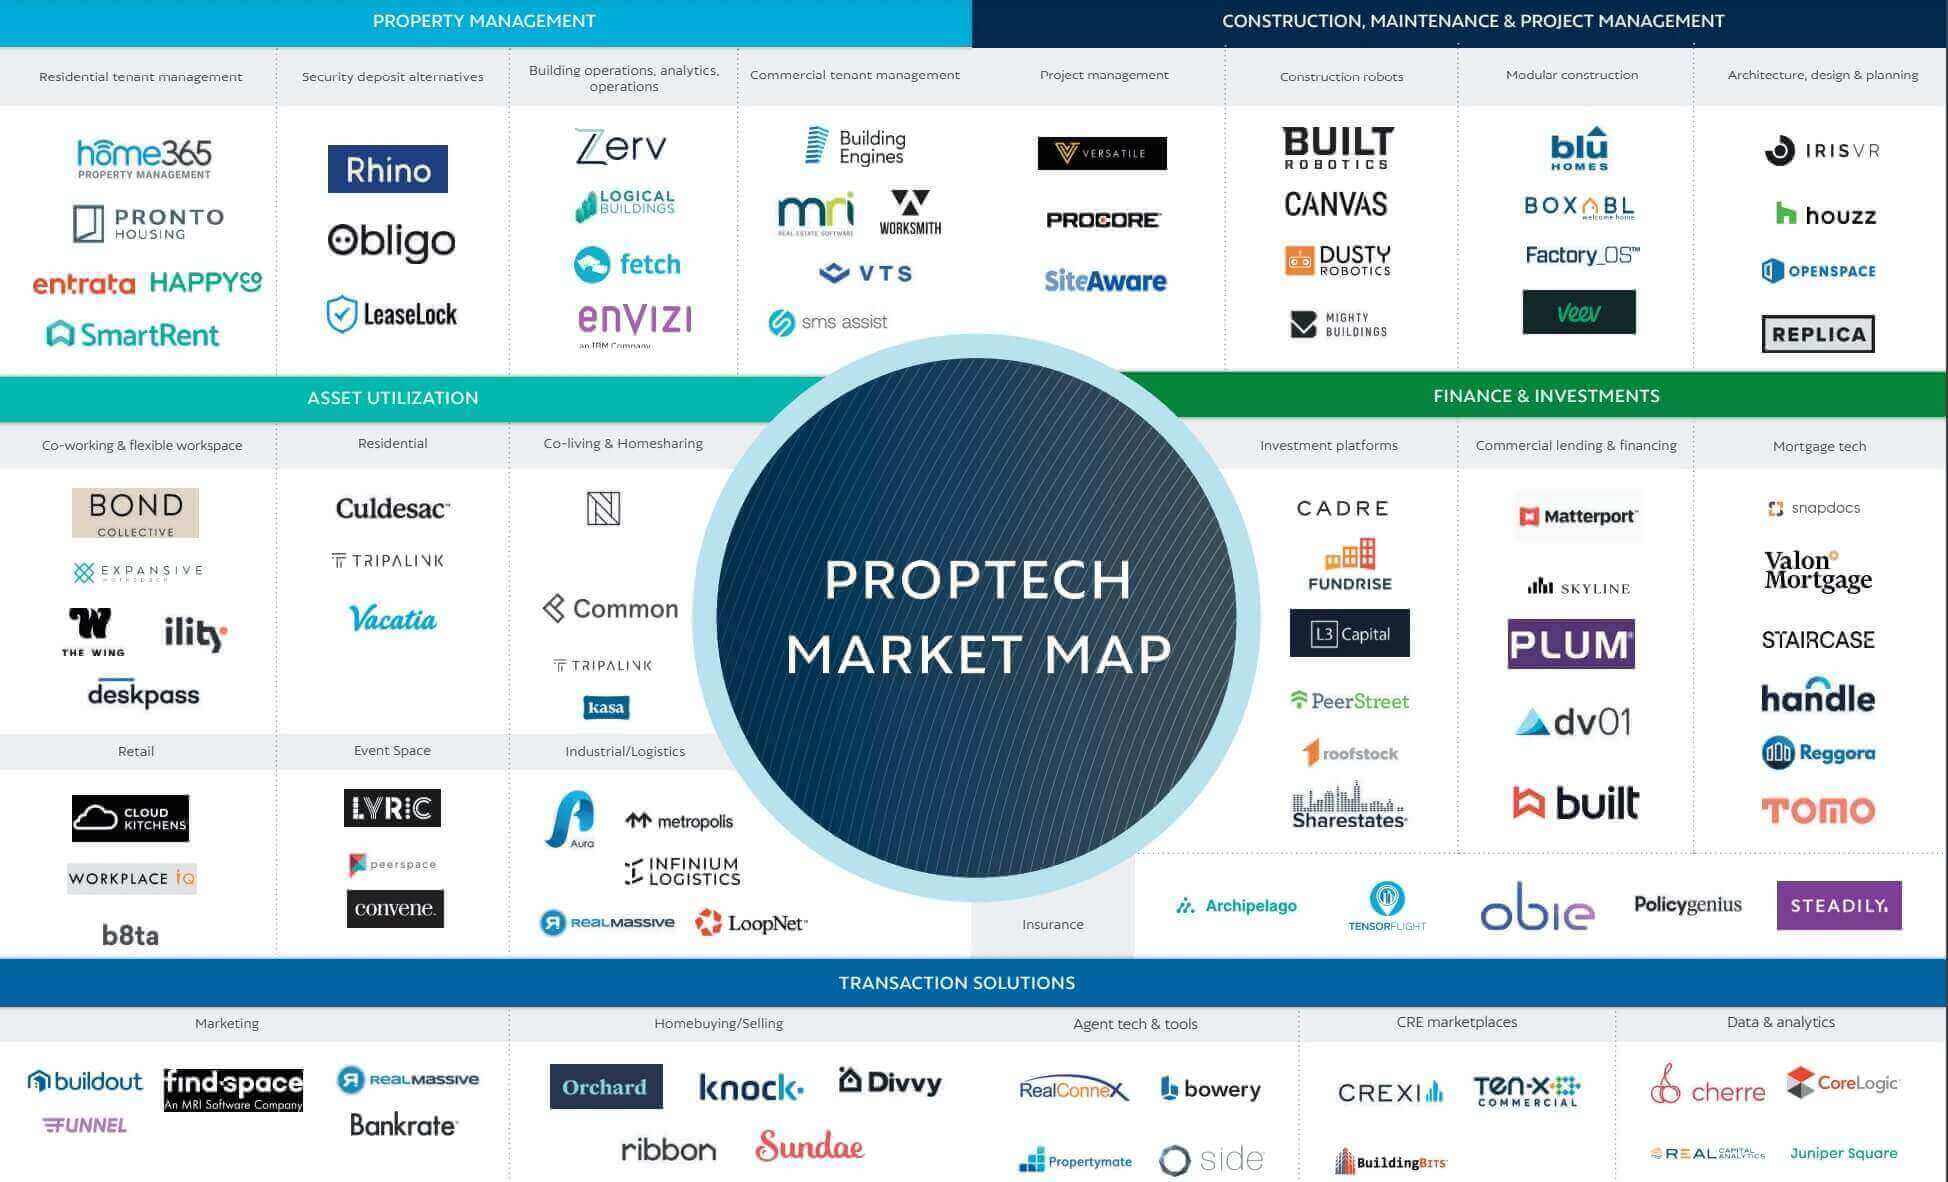 Proptech Market Map